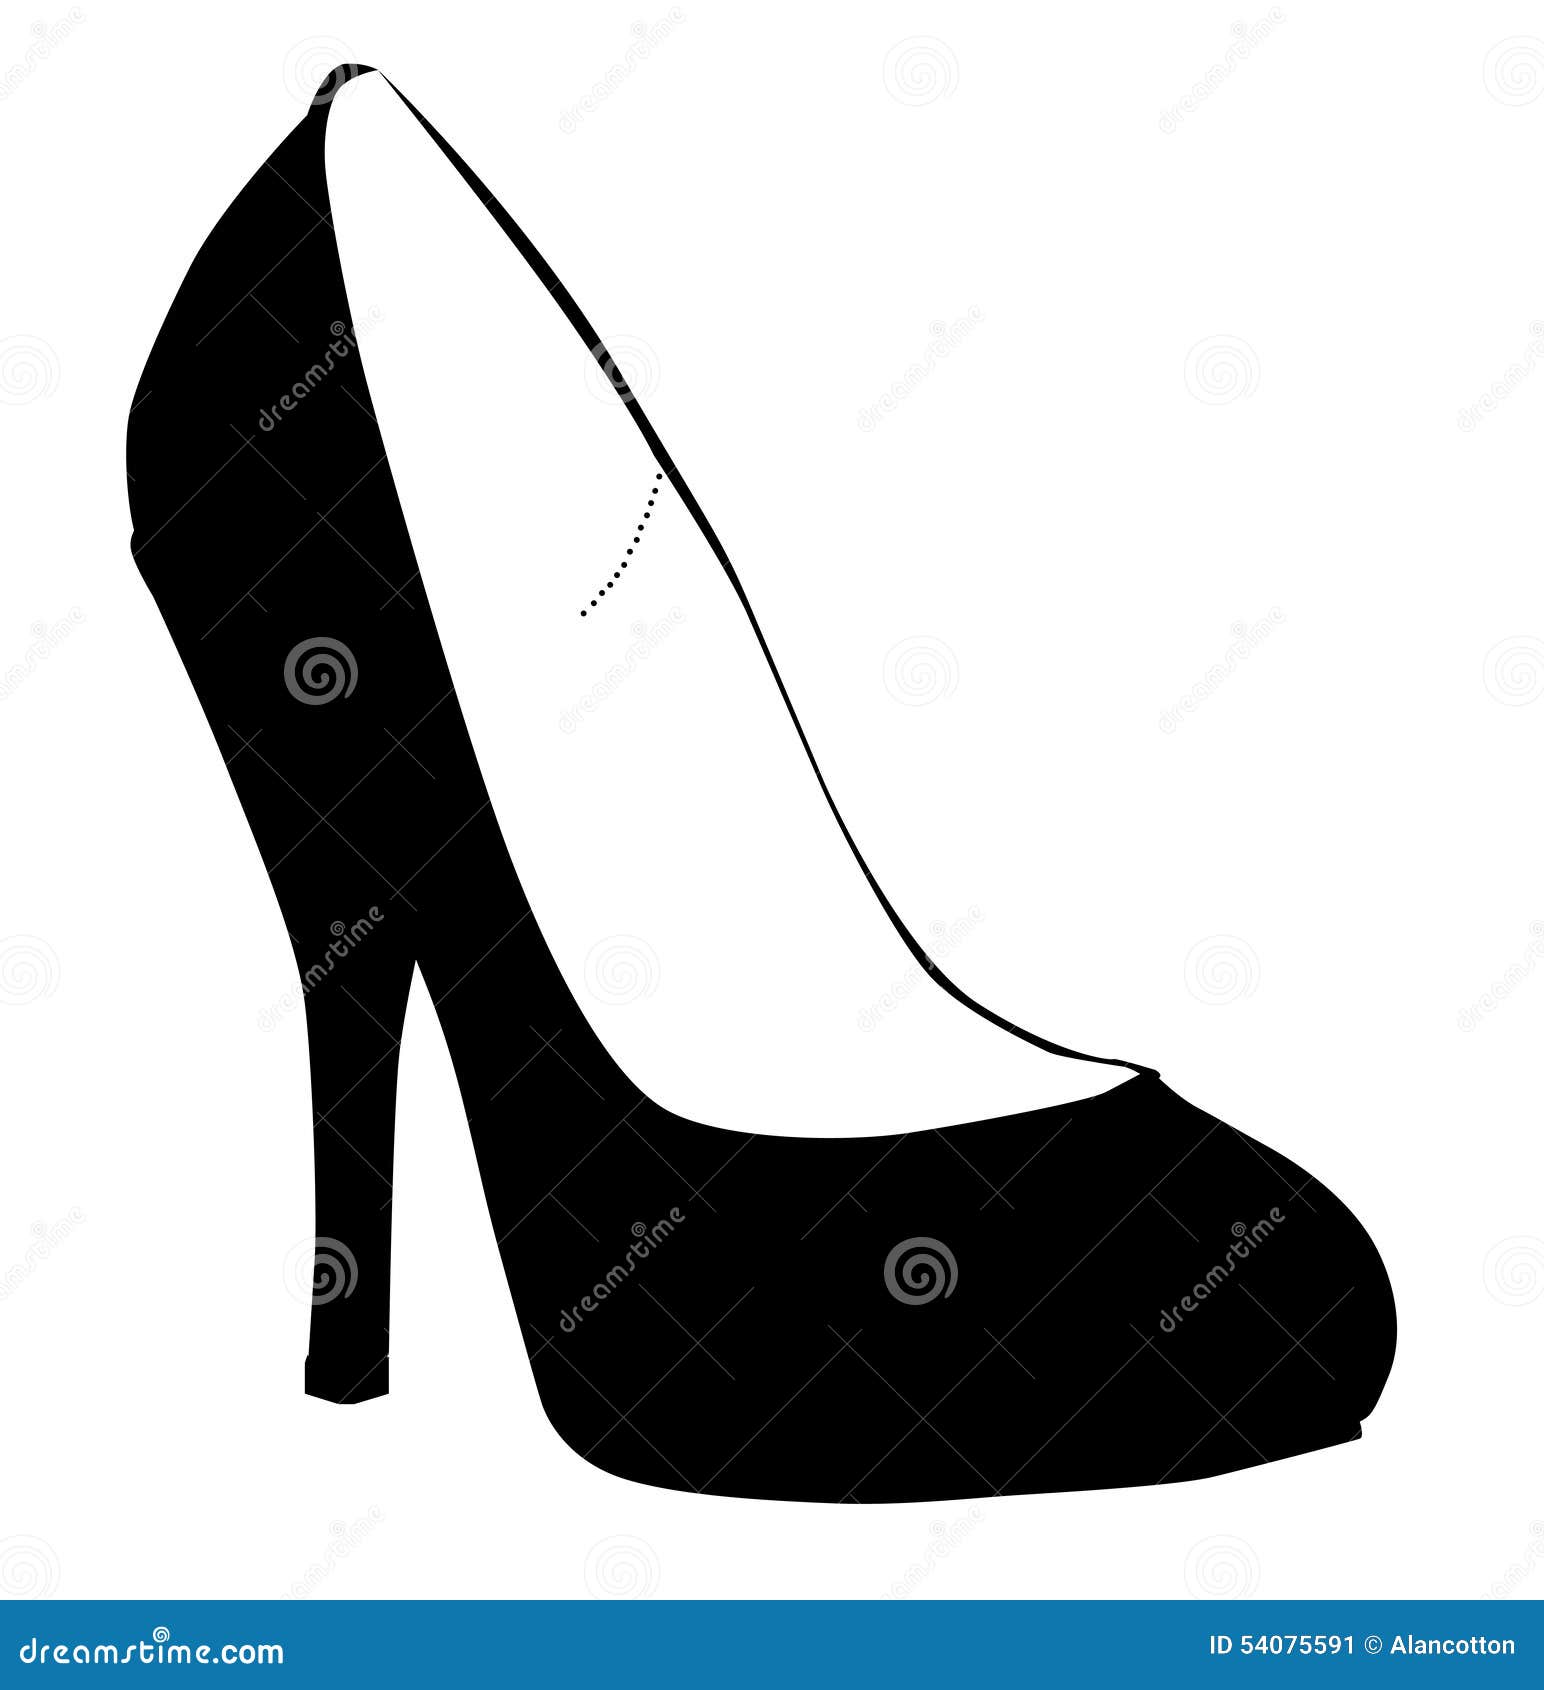 Stiletto Heel Silhouette Stock Illustration - Image: 54075591